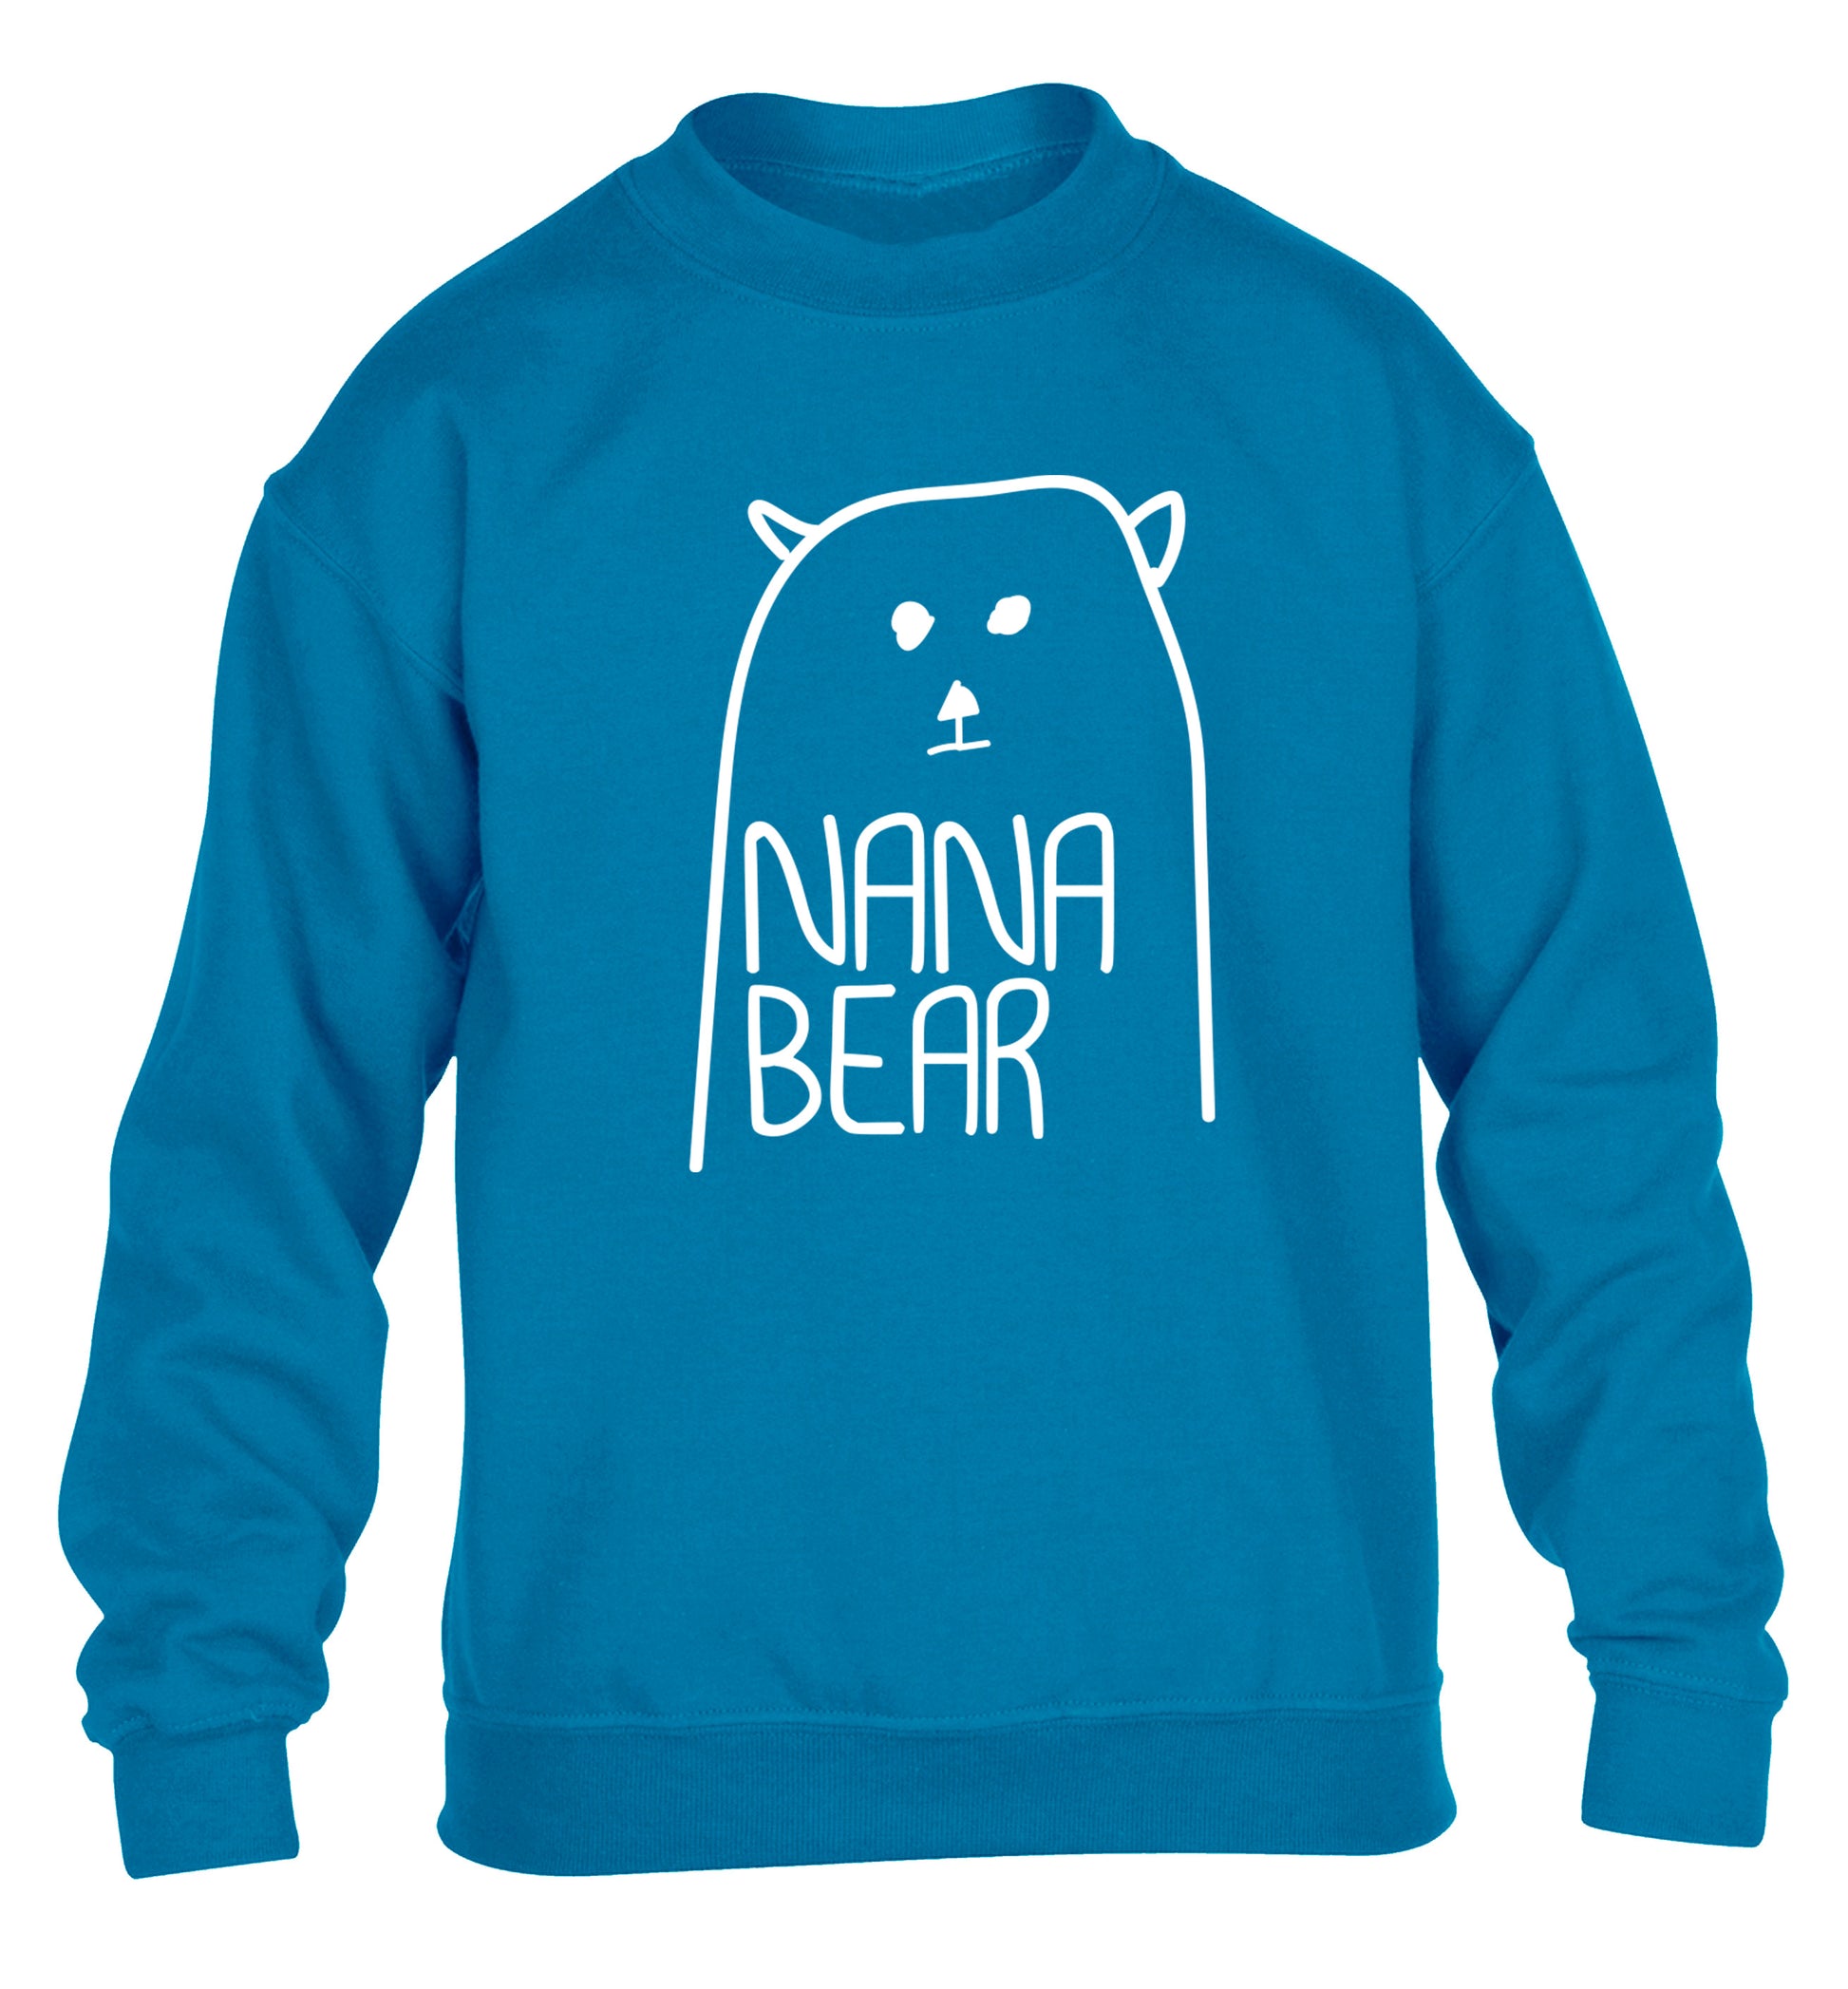 Nana bear children's blue sweater 12-13 Years